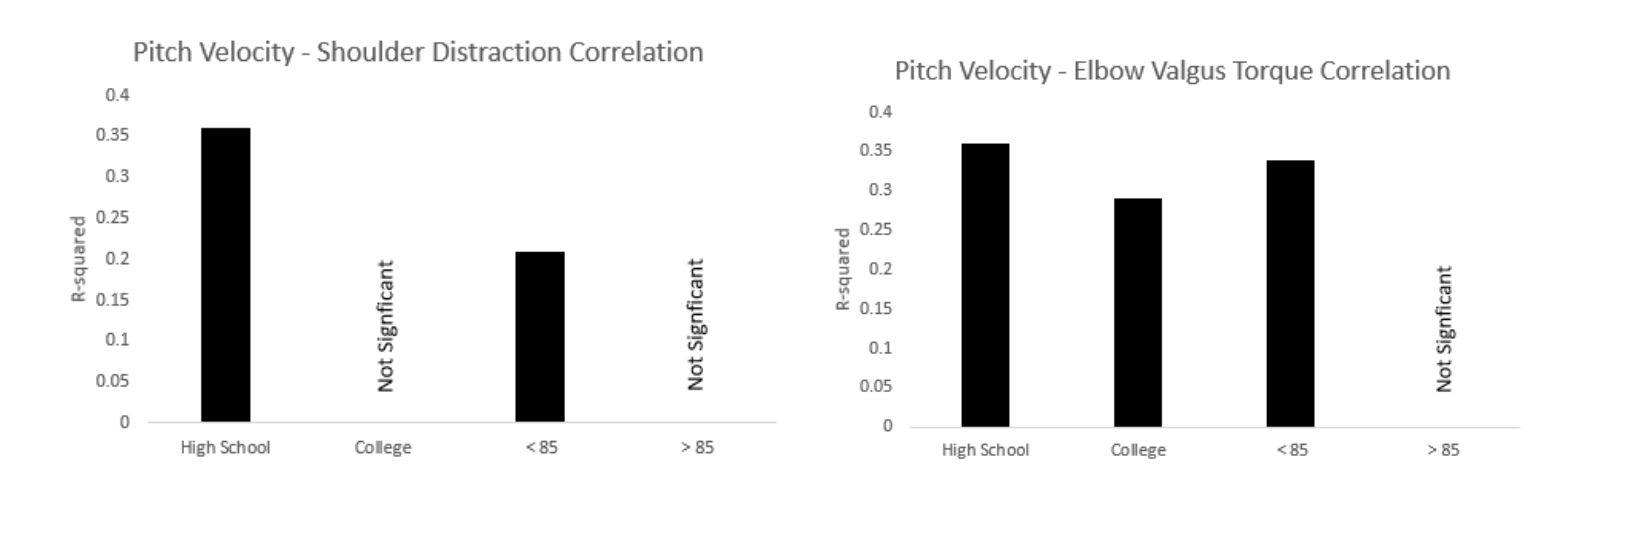 Pitch Velocity Shoulder Correlation